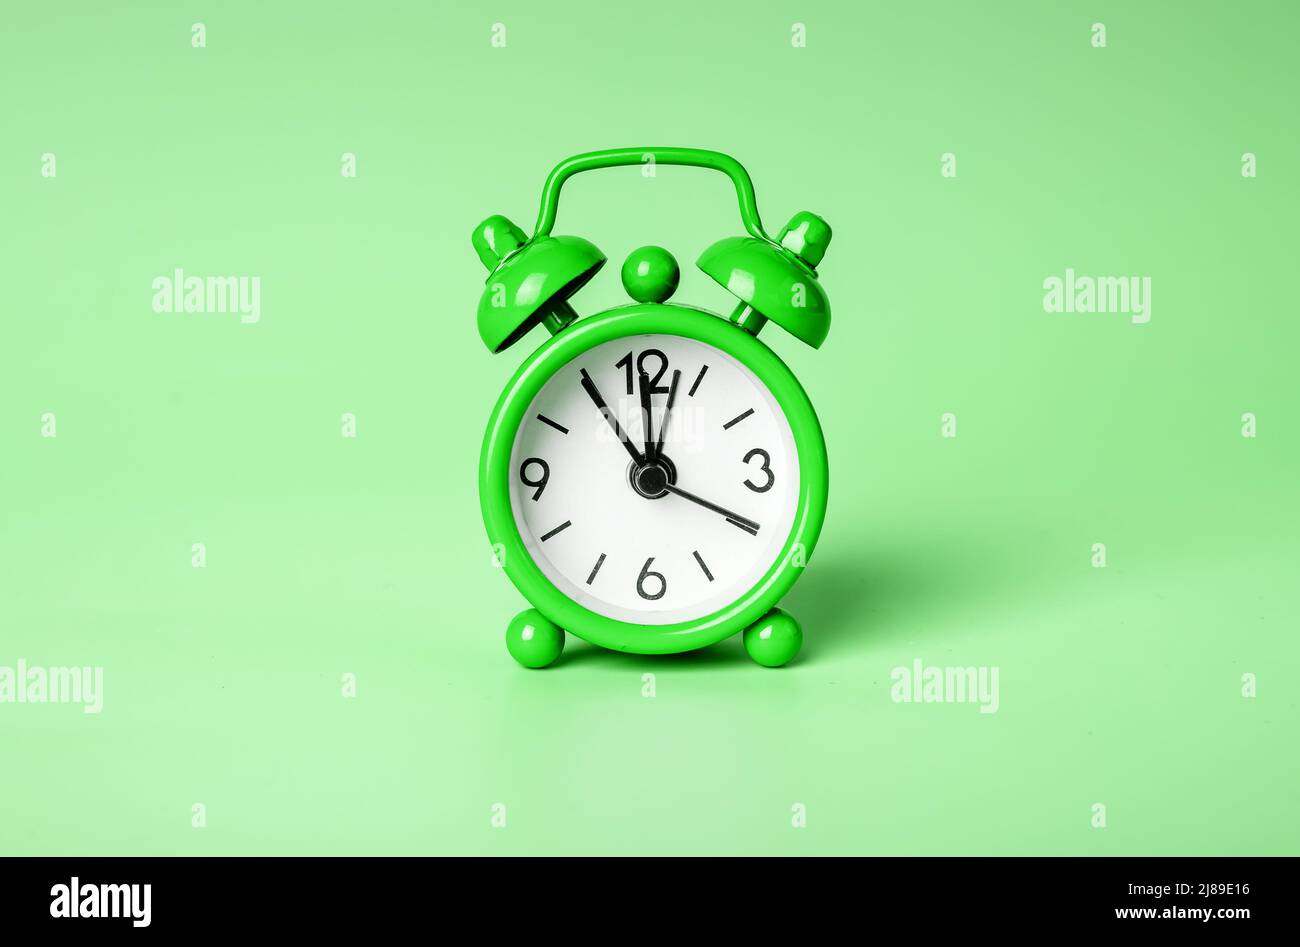 Retro green alarm clock on eco background. High quality photo Stock Photo